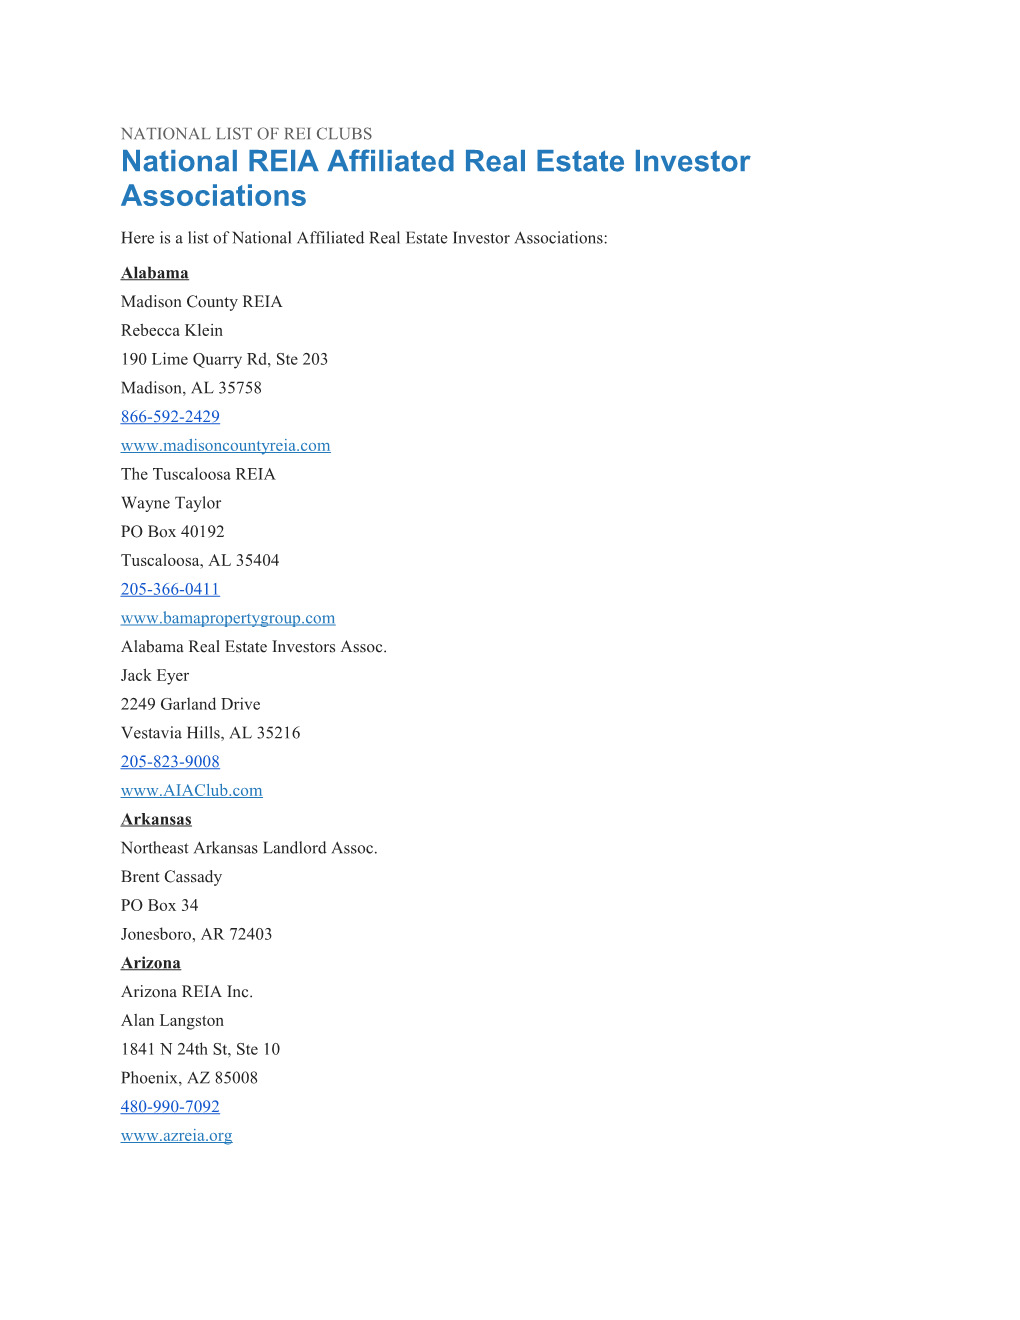 National REIA Affiliated Real Estate Investor Associations